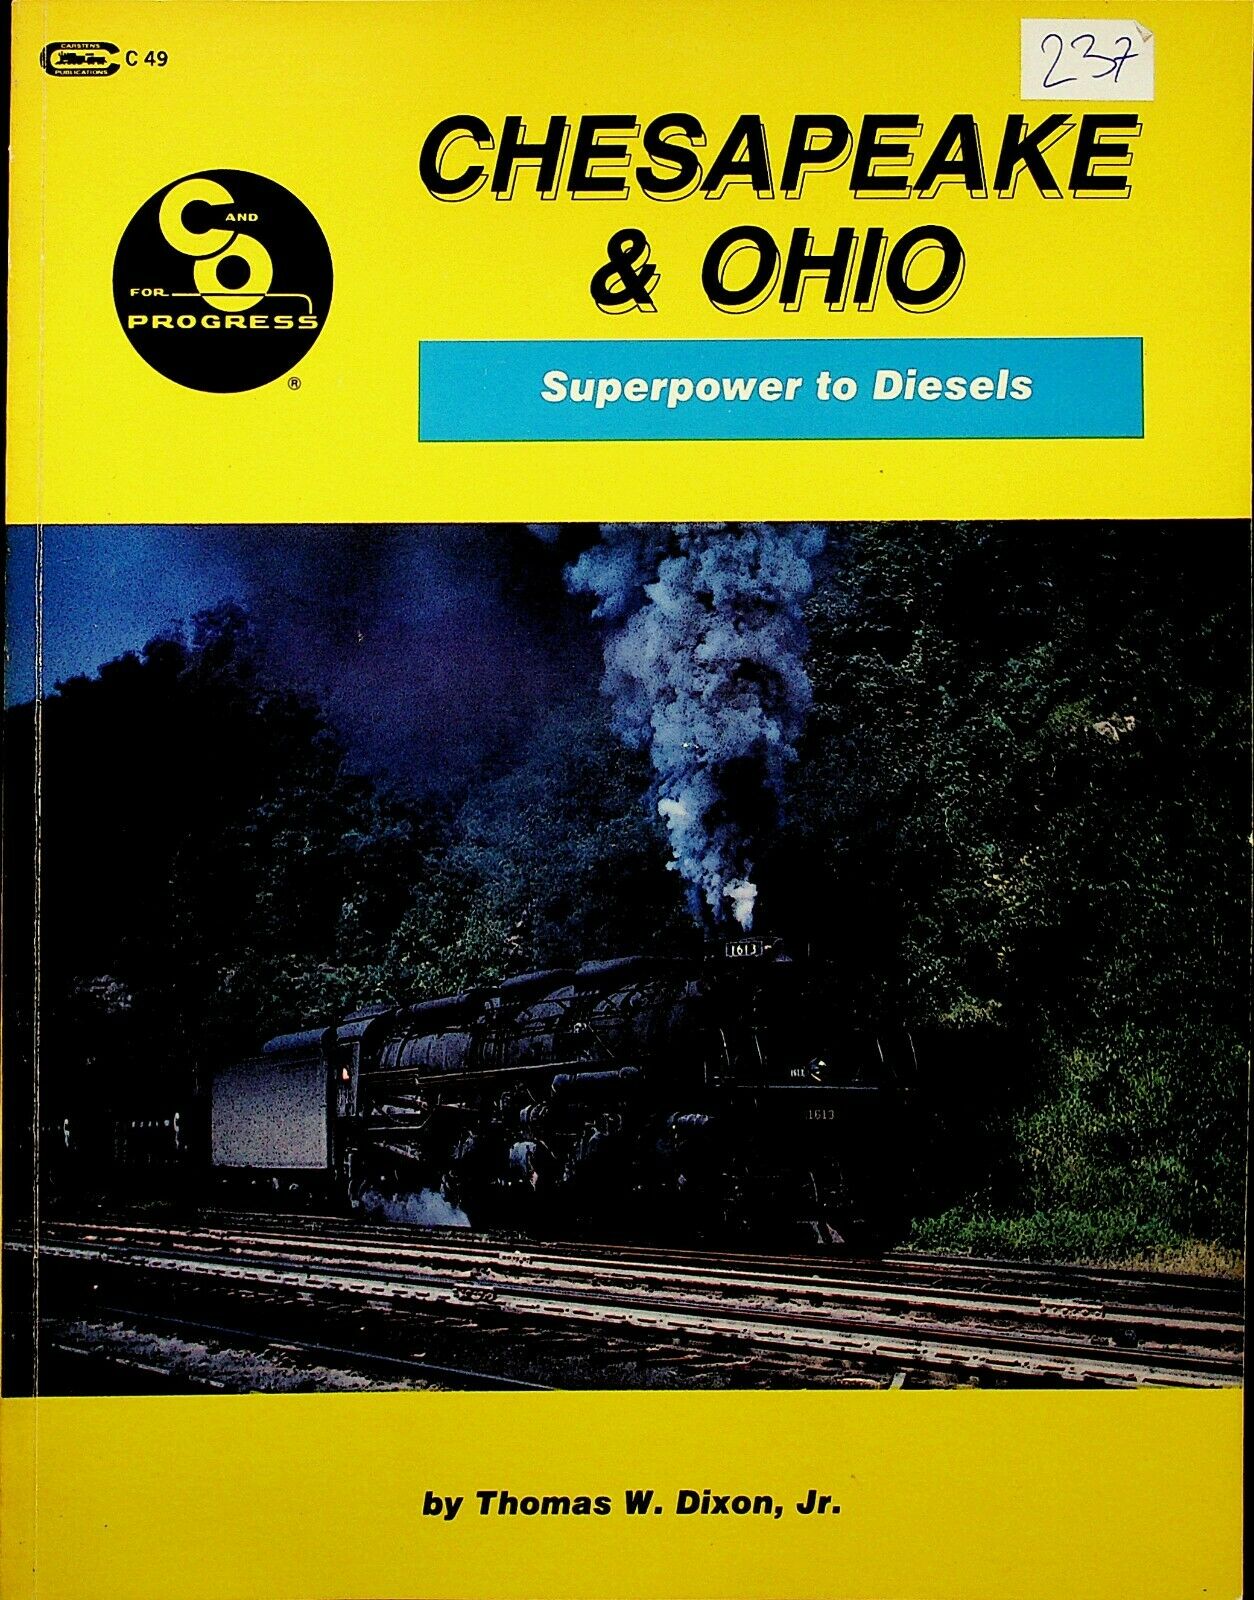 Dr237 Chesapeake &ohio Superpower To Diesels By Thomas W Dixon Jr Carstens Pub